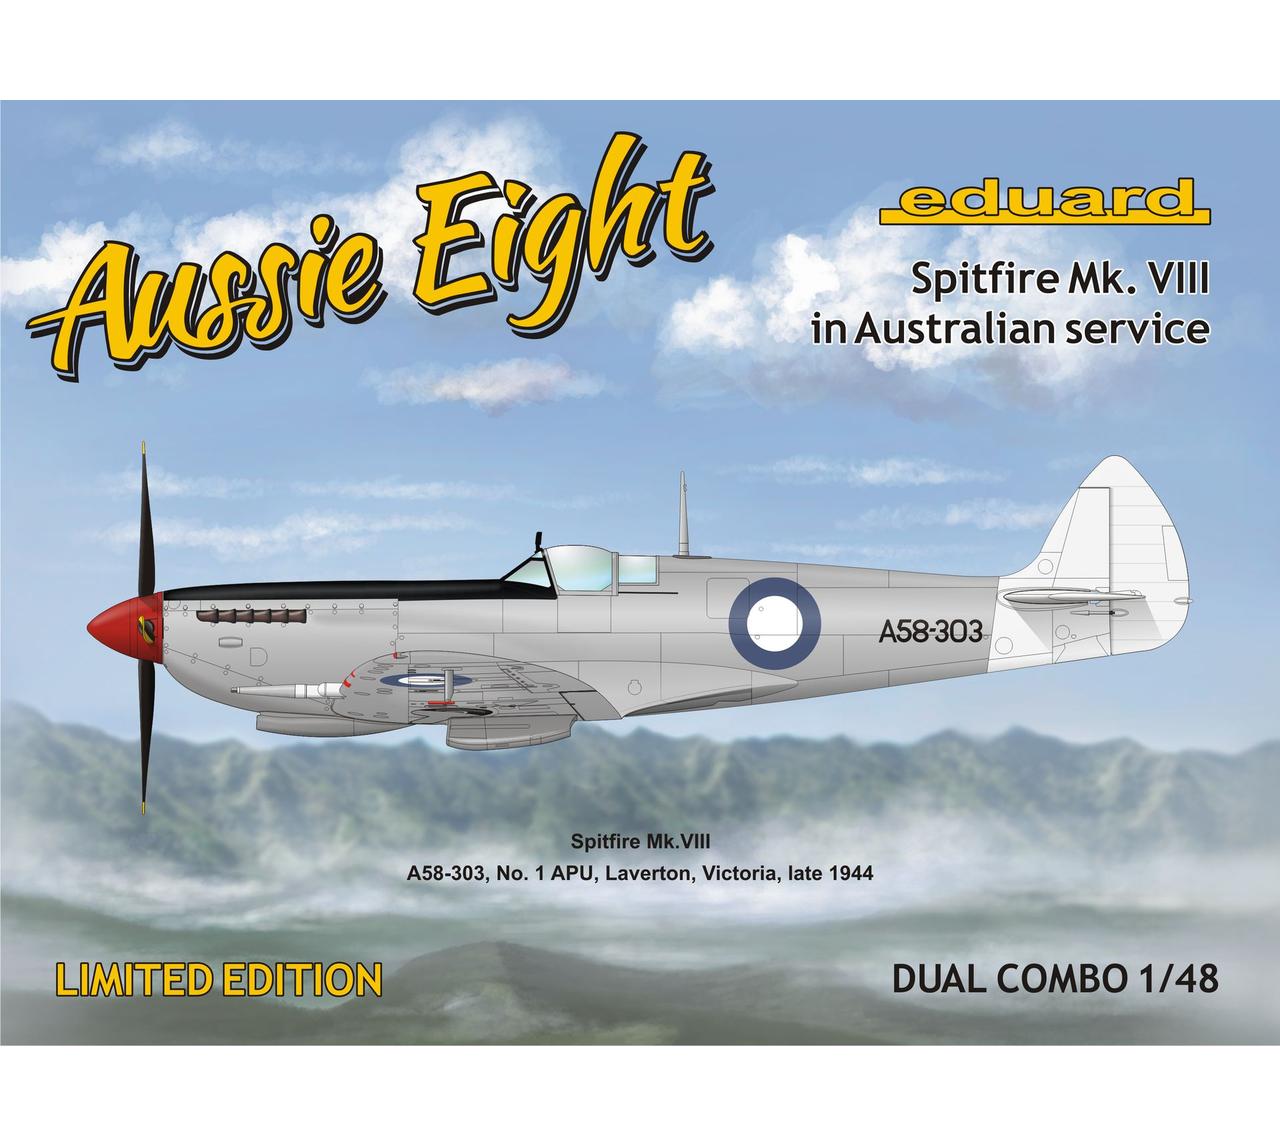 Eduard Spitfire-kavalkad, Aussie Eight #1 klar, Aussie Eight #2 NY!, Bonus: Airfix Spitfire XII - Sida 12 11